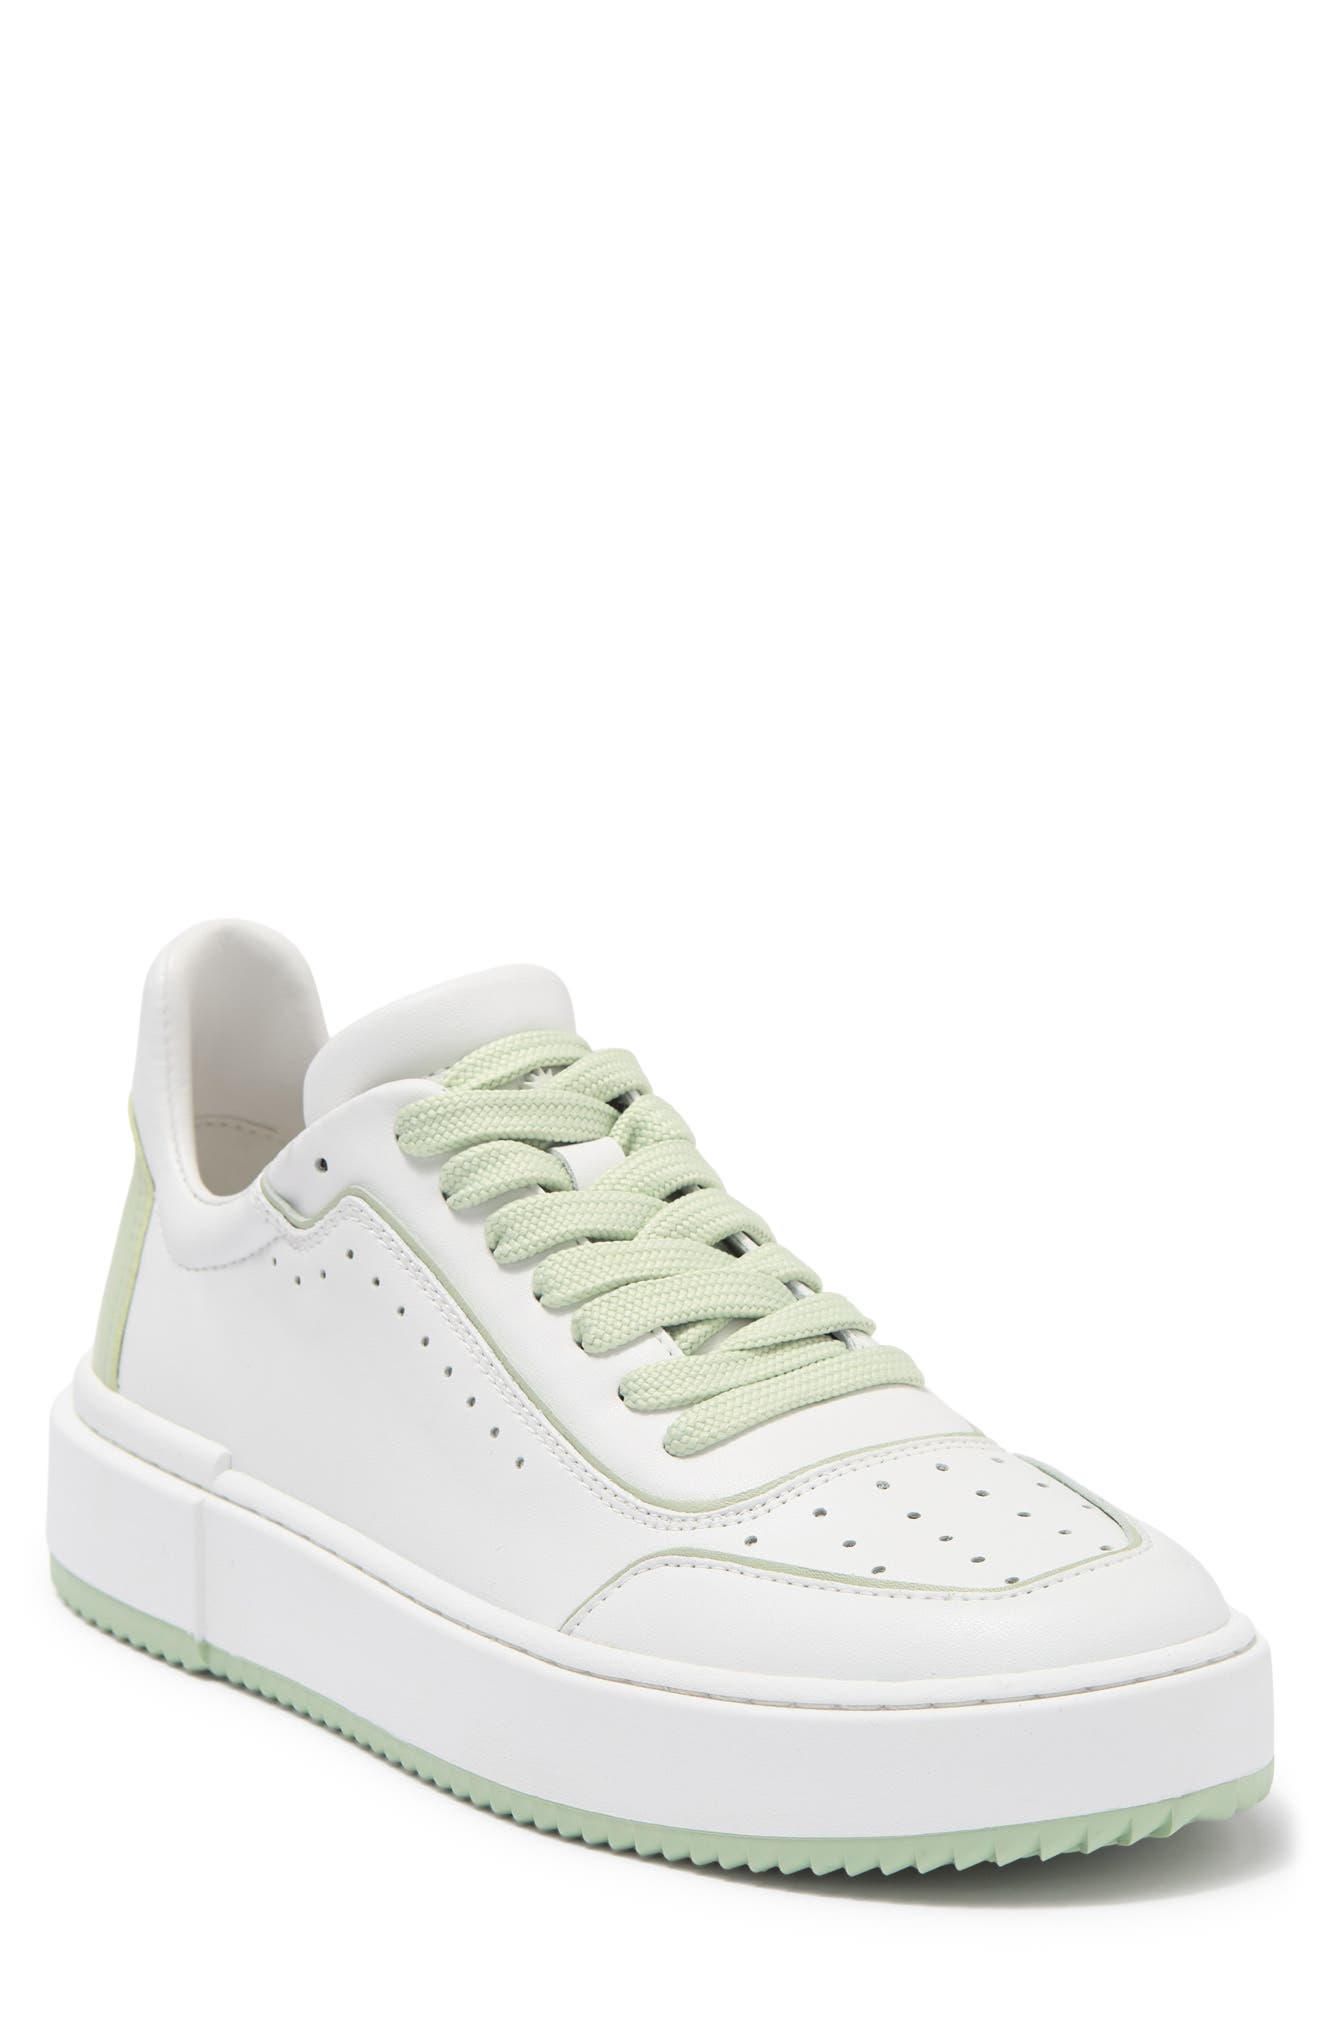 Stuart Weitzman Ryan Sneaker In White/ Quartz Green | ModeSens